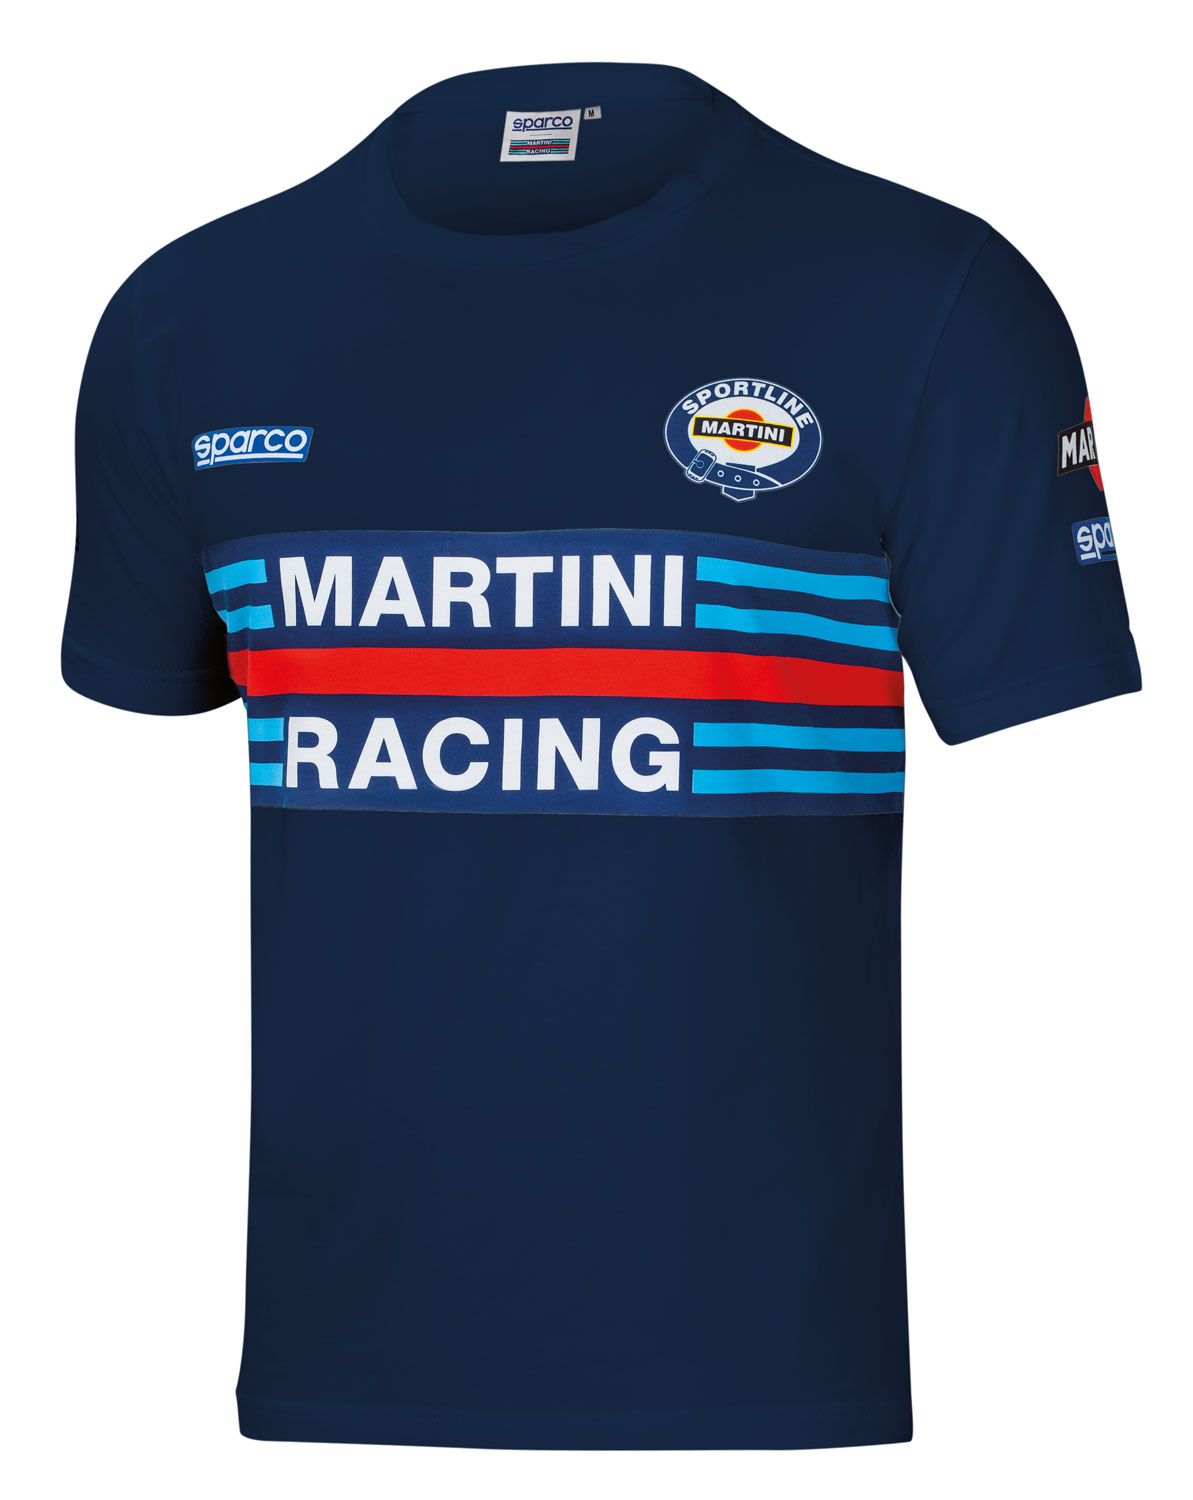 Sparco T-Shirt Martini Racing, dunkelblau